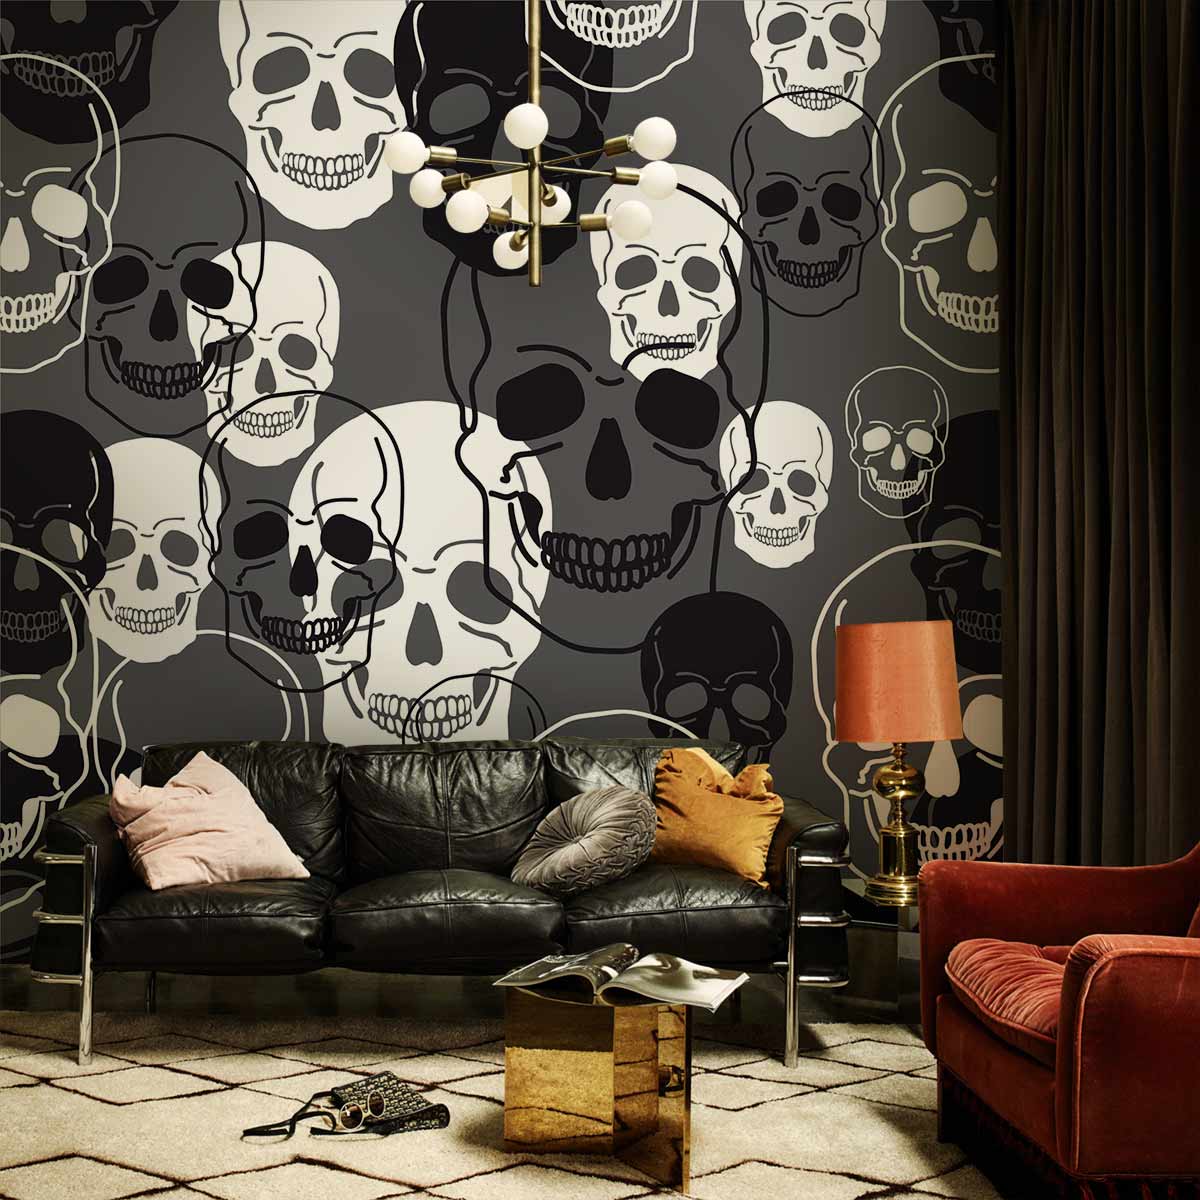 100+] Black Skeleton Wallpapers | Wallpapers.com